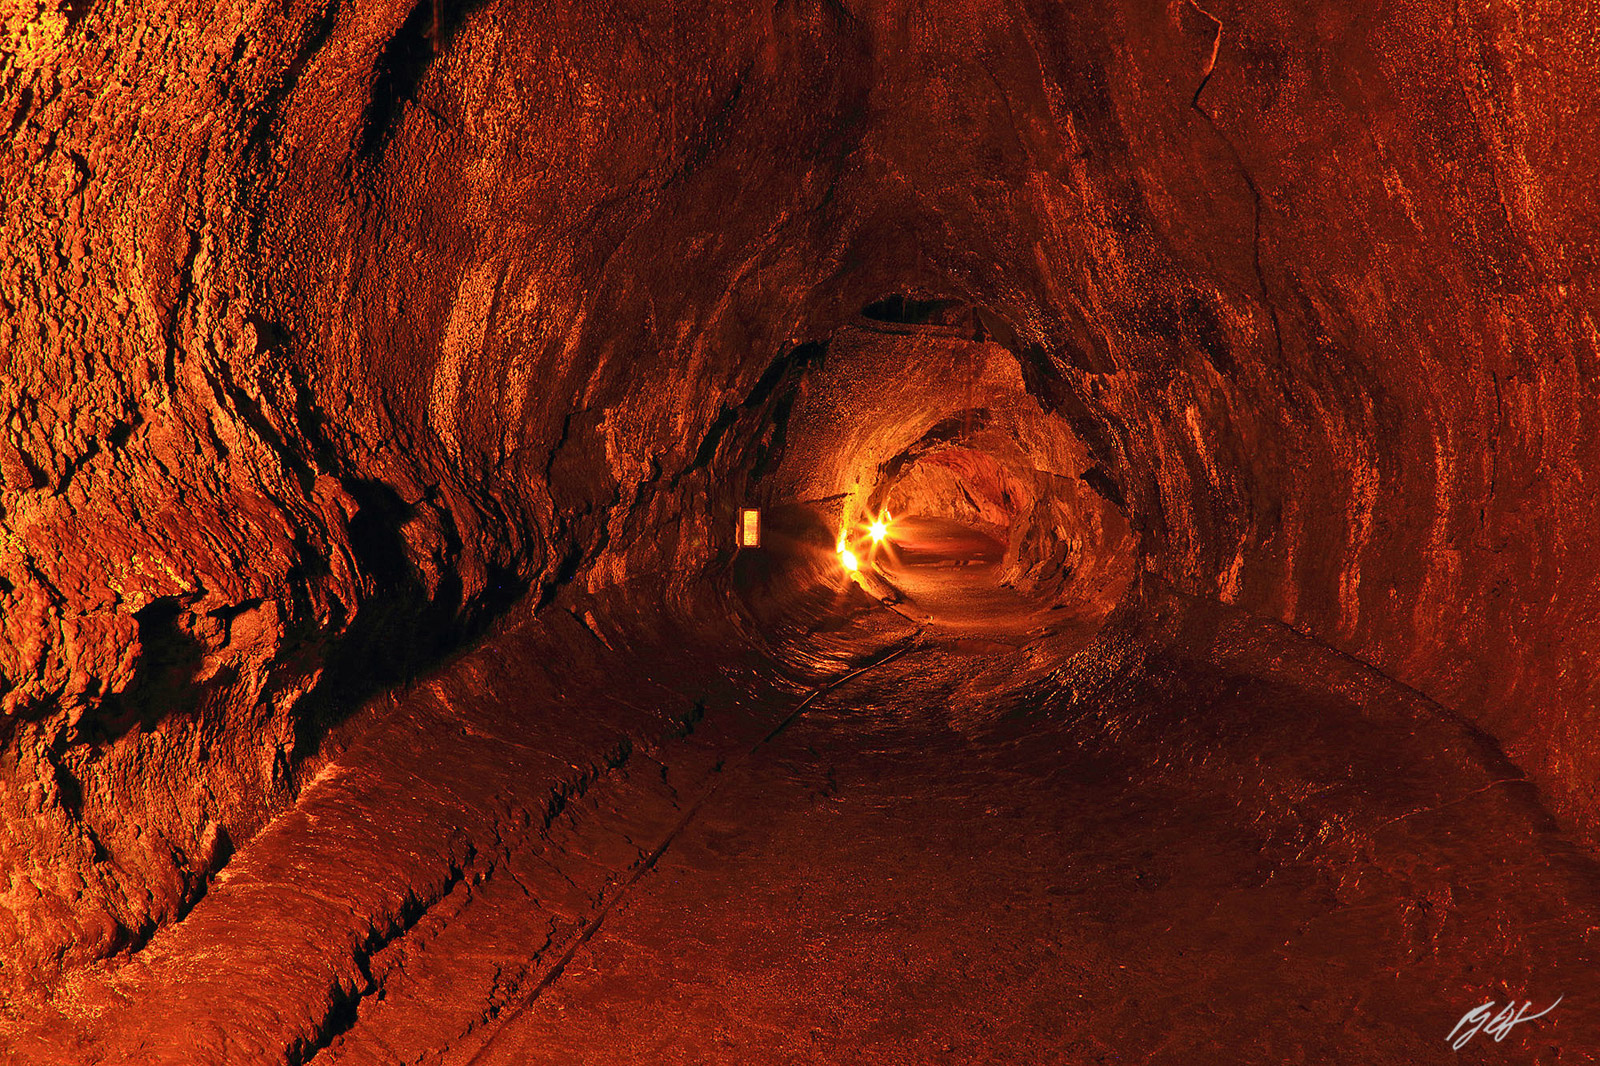 Inside the Thurston Lava Tube on the Big Island of Hawaii